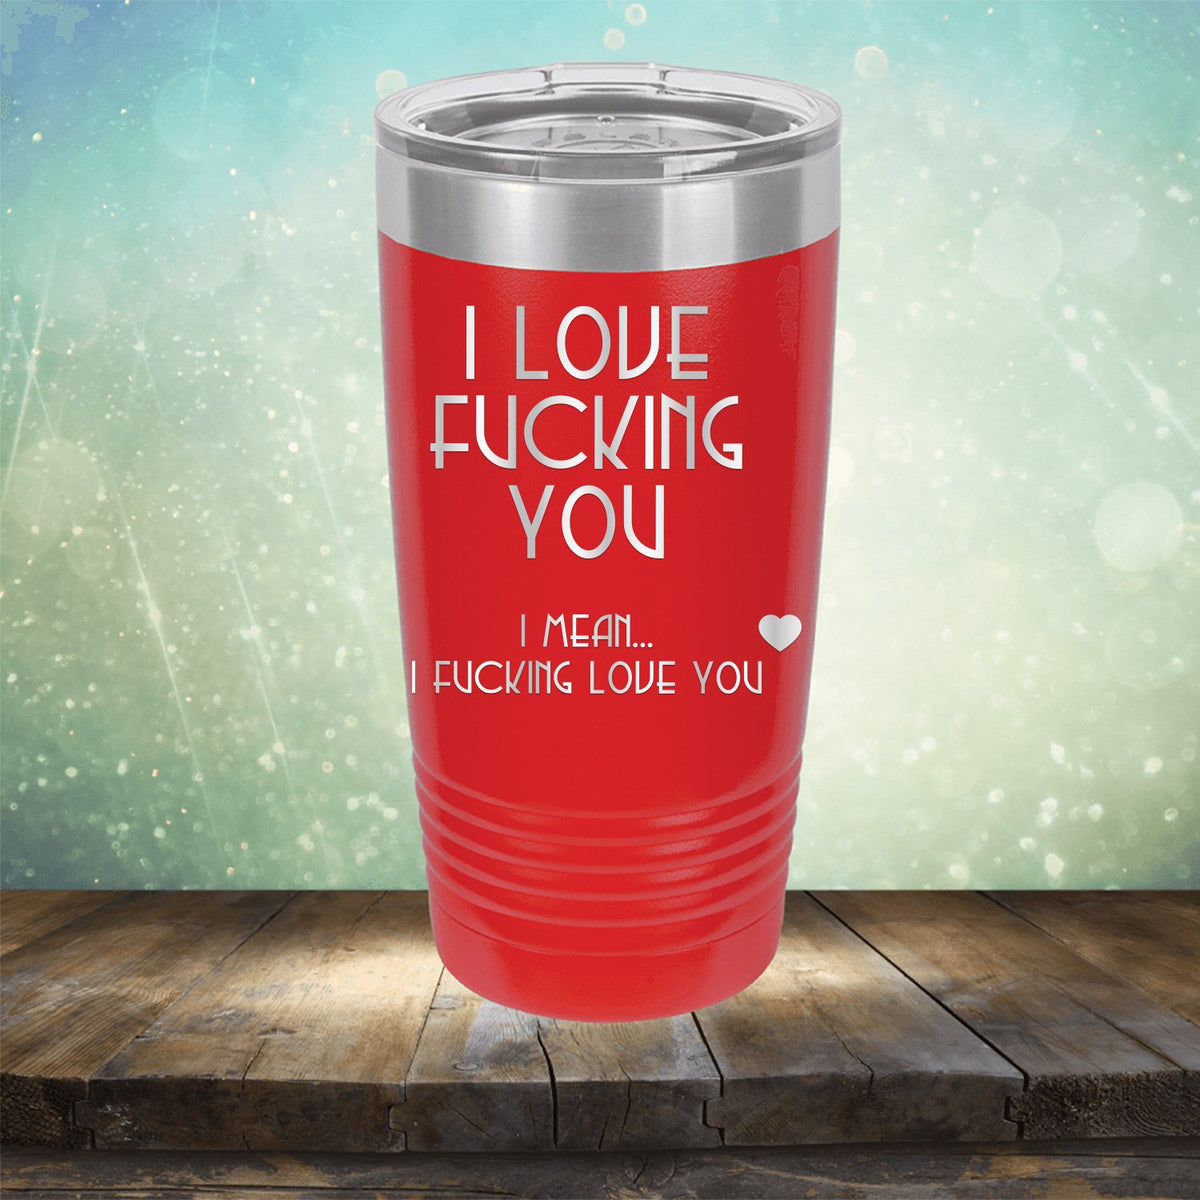 I Love Fucking You I Mean I Fucking Love You - Laser Etched Tumbler Mug